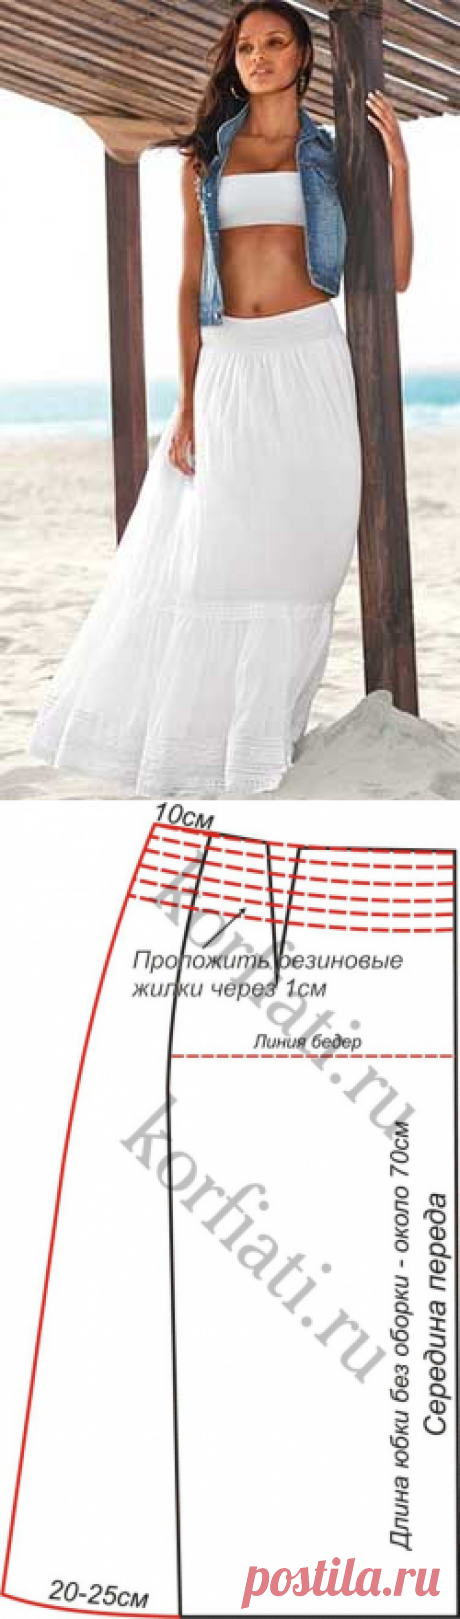 Выкройка юбка на резинке - от Анастасии Корфиати